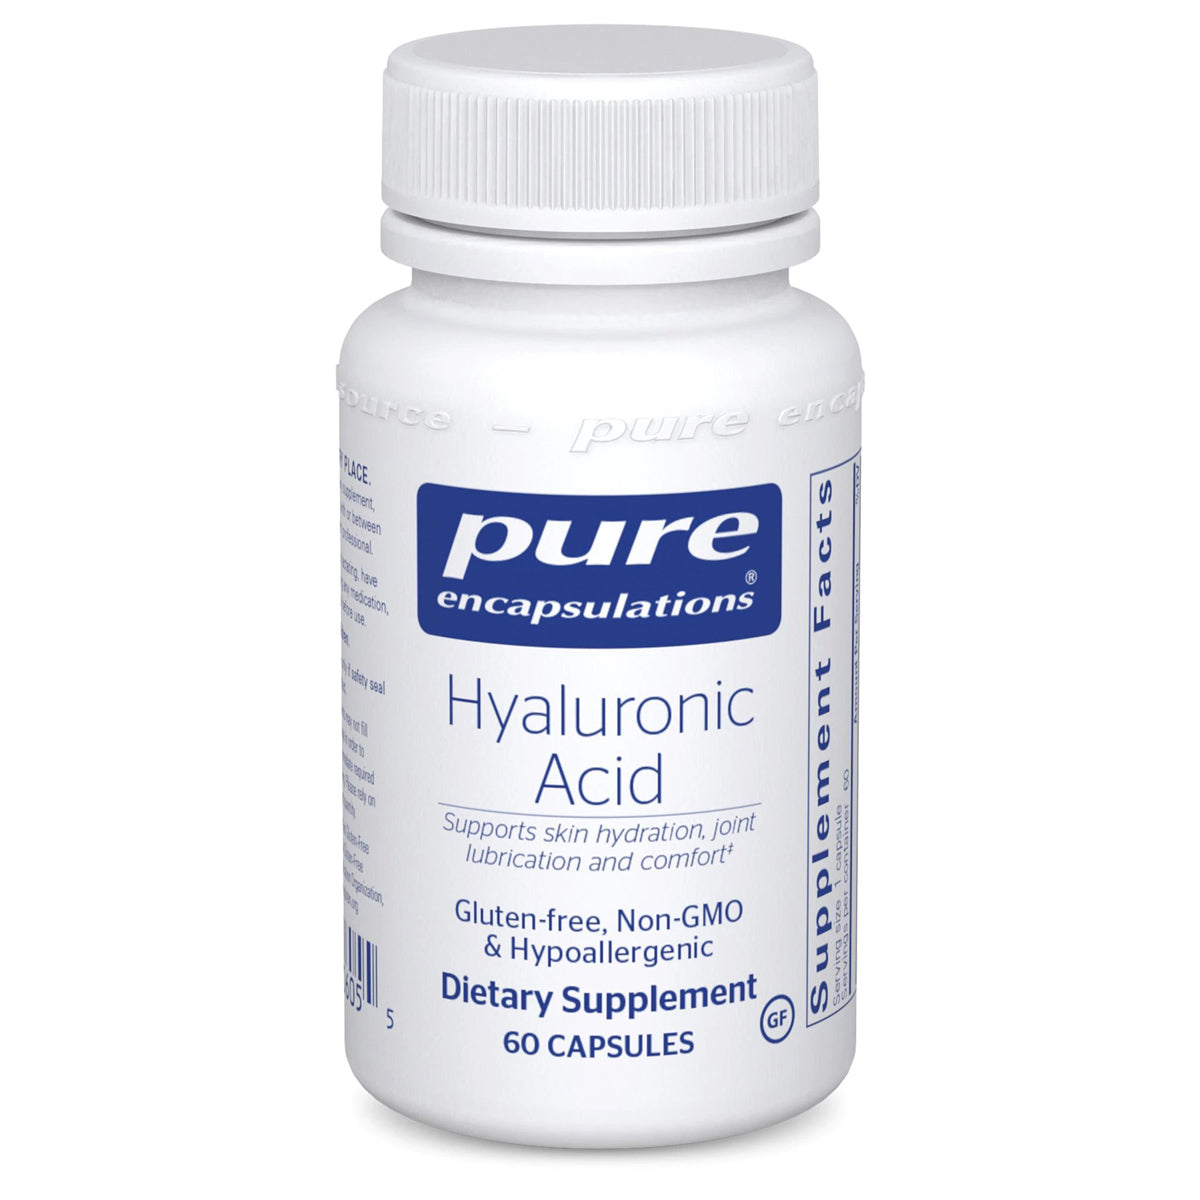 Hyaluronic Acid supplements